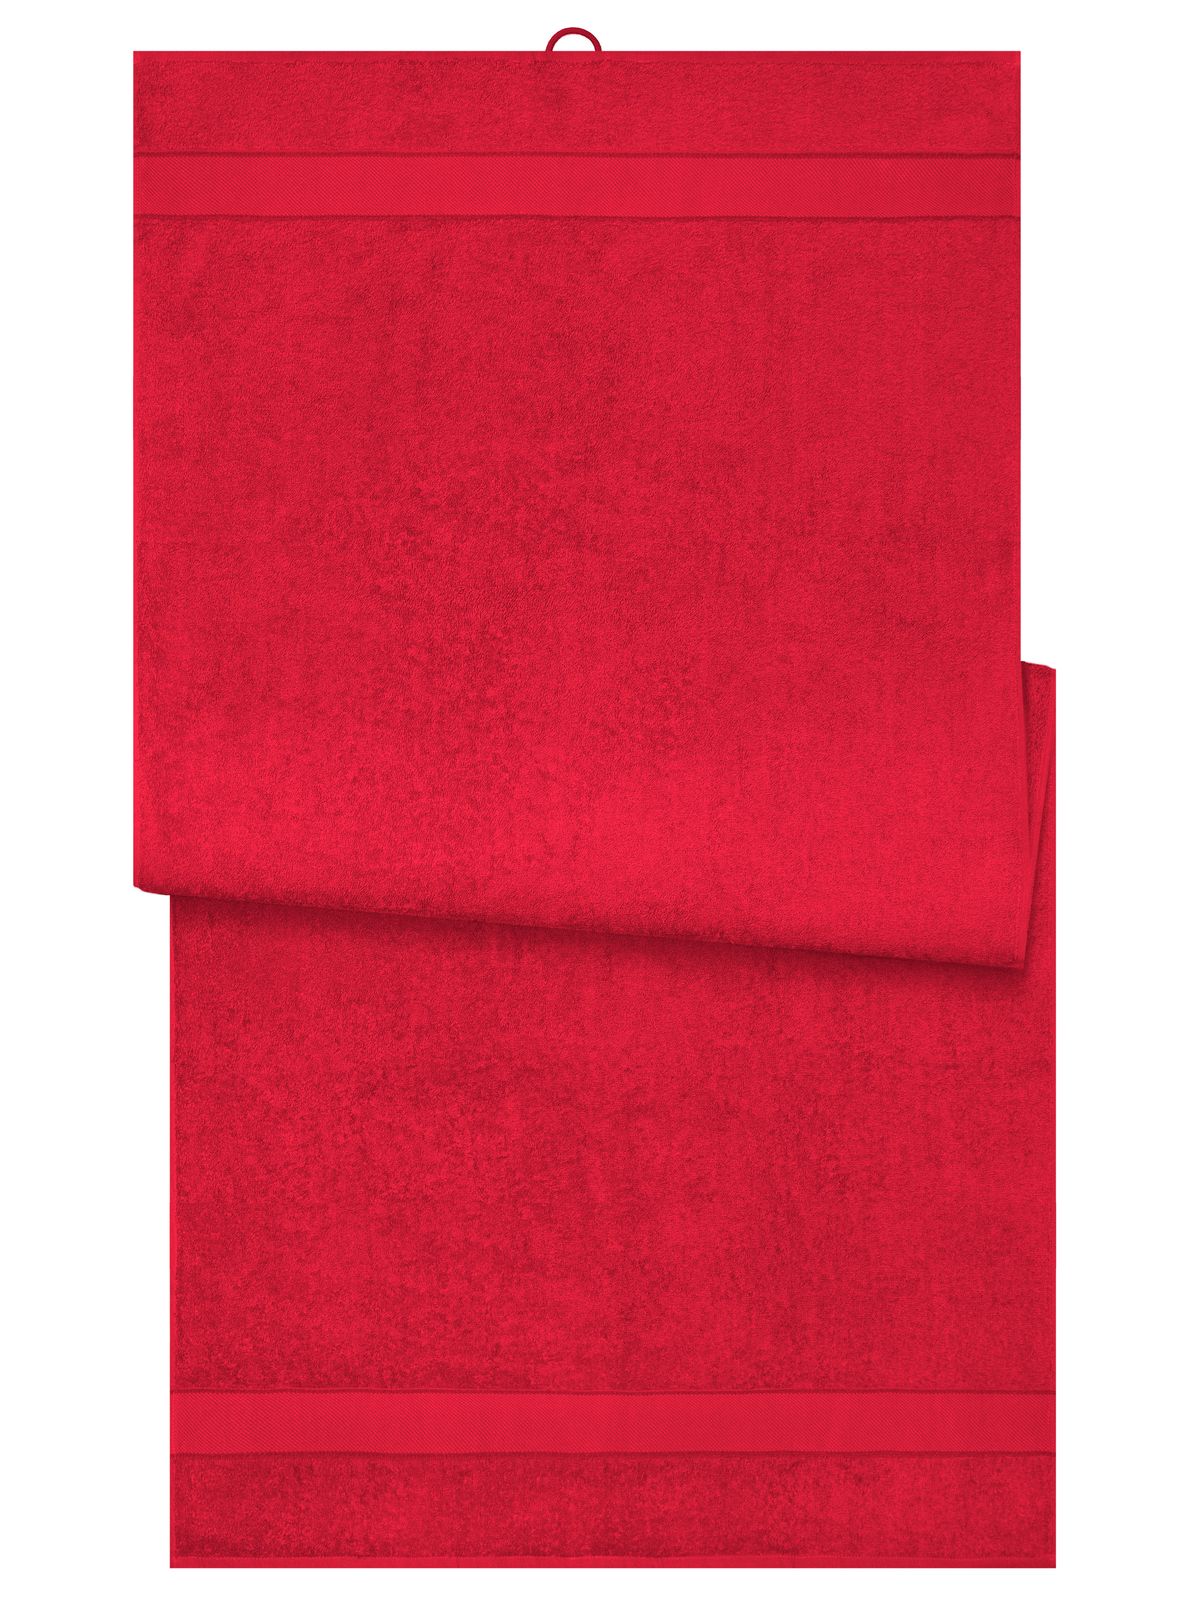 bath-sheet-red.webp